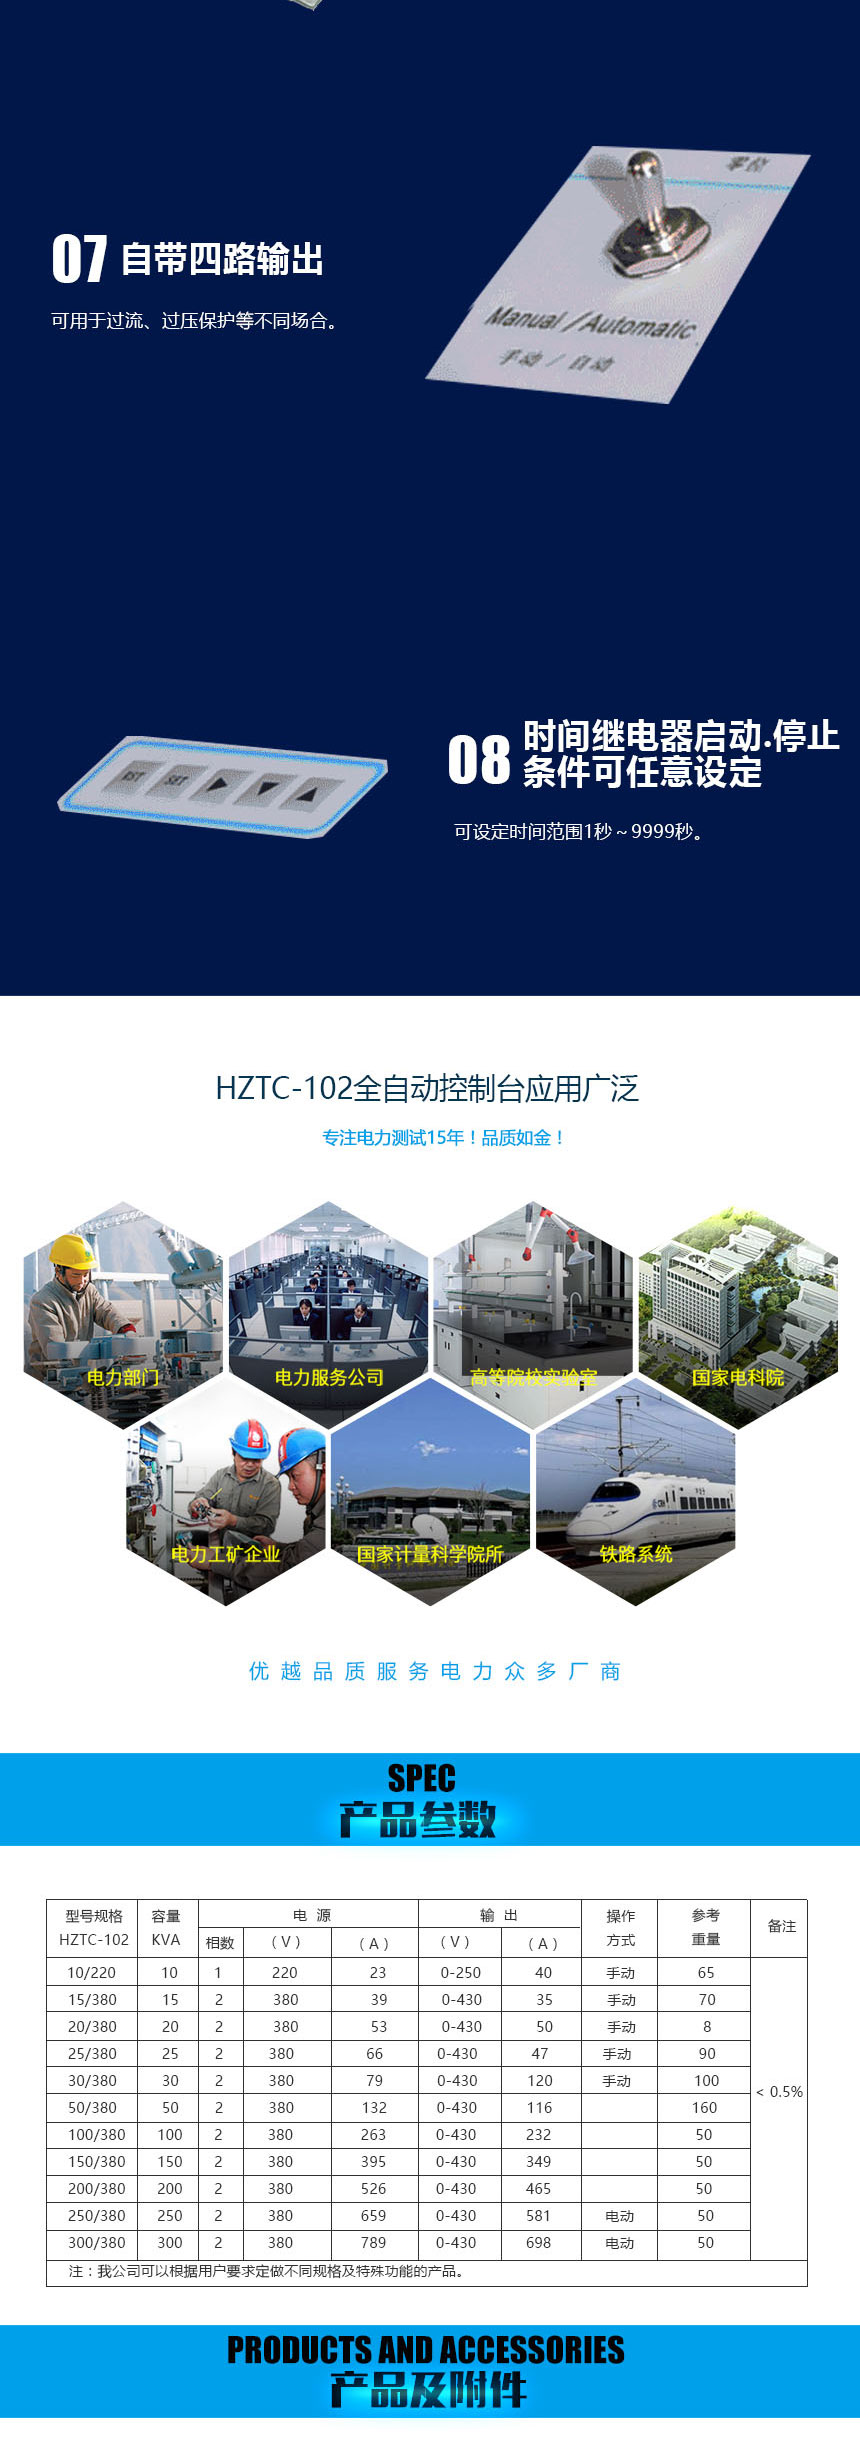 HZTC-102全自动耐压试验控制台